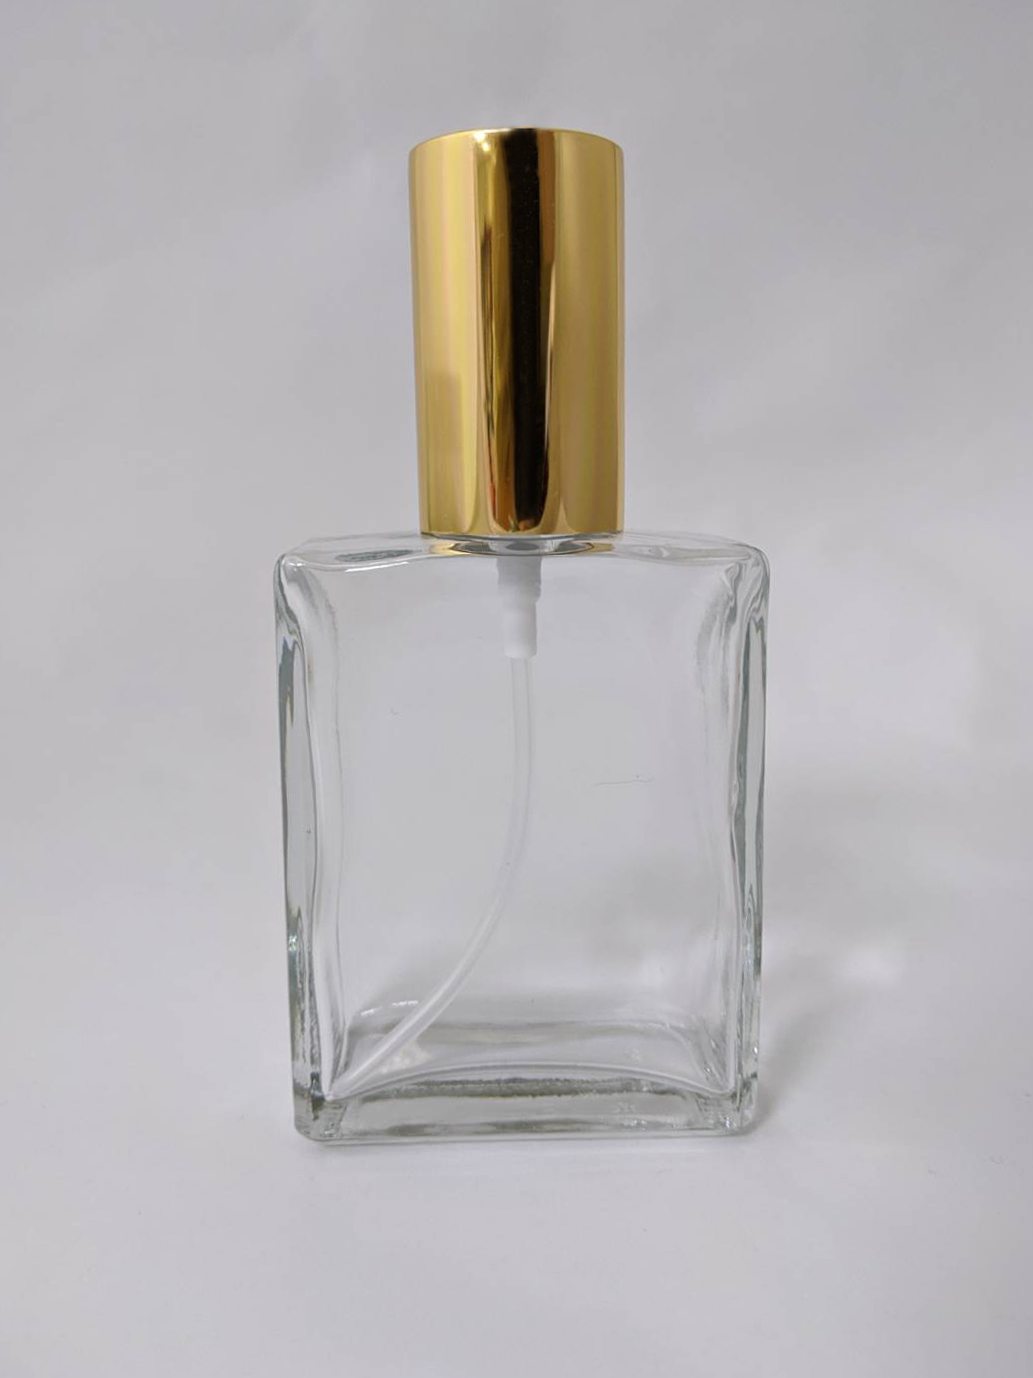 60ml金色喷雾方扁透明玻璃空瓶